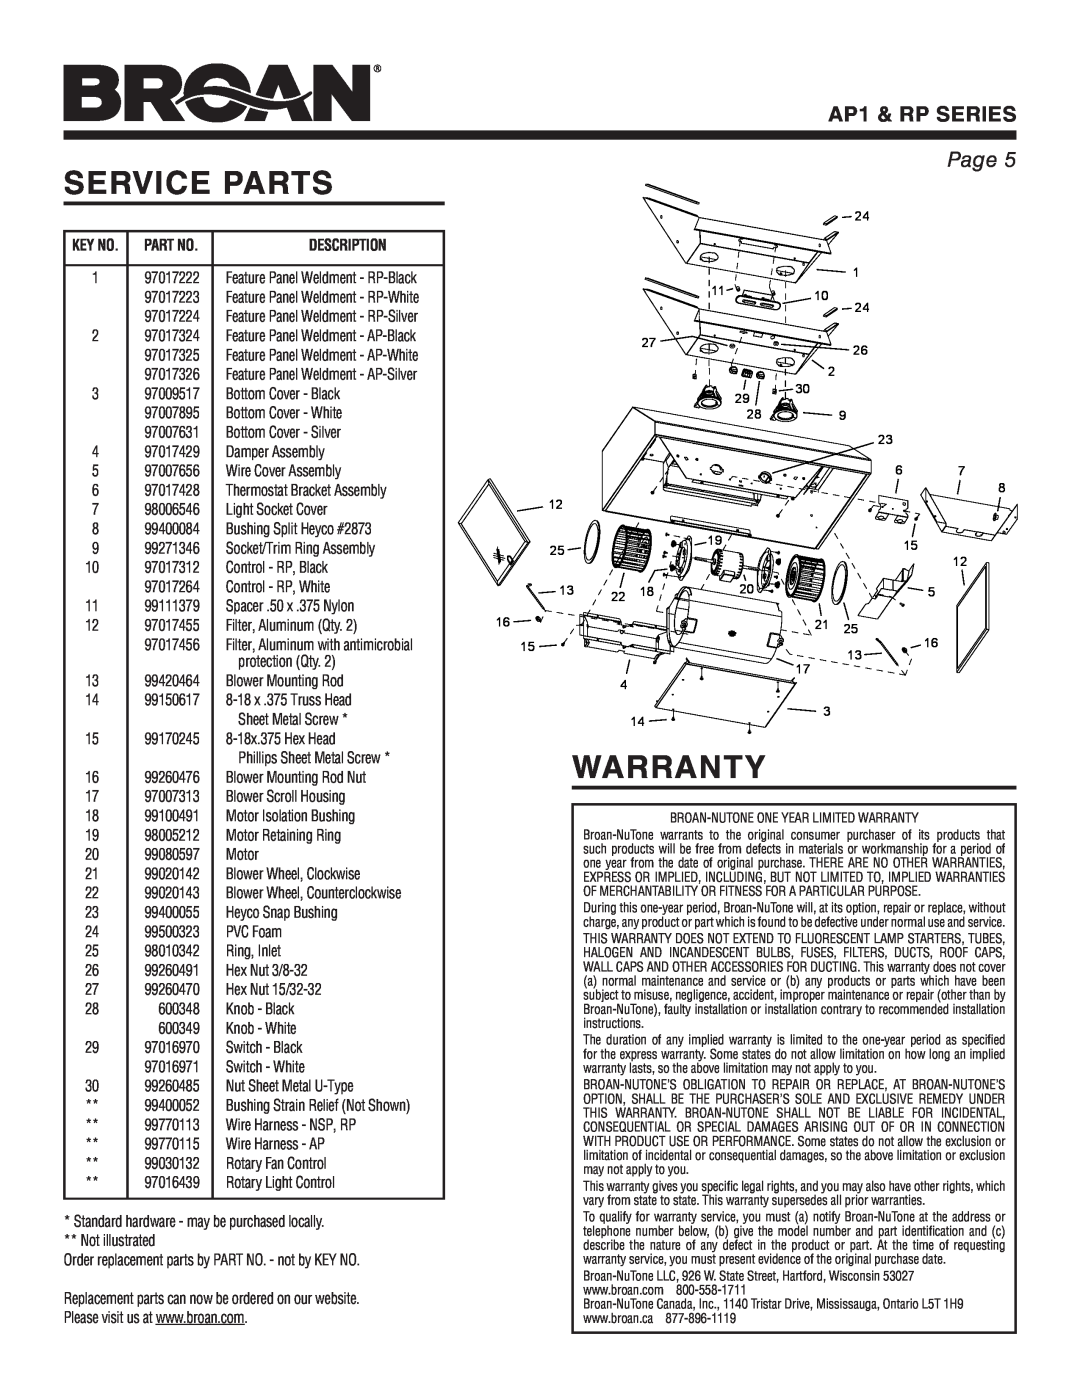 Broan warranty Service Parts, Warranty, AP1 & RP SERIES, Page 